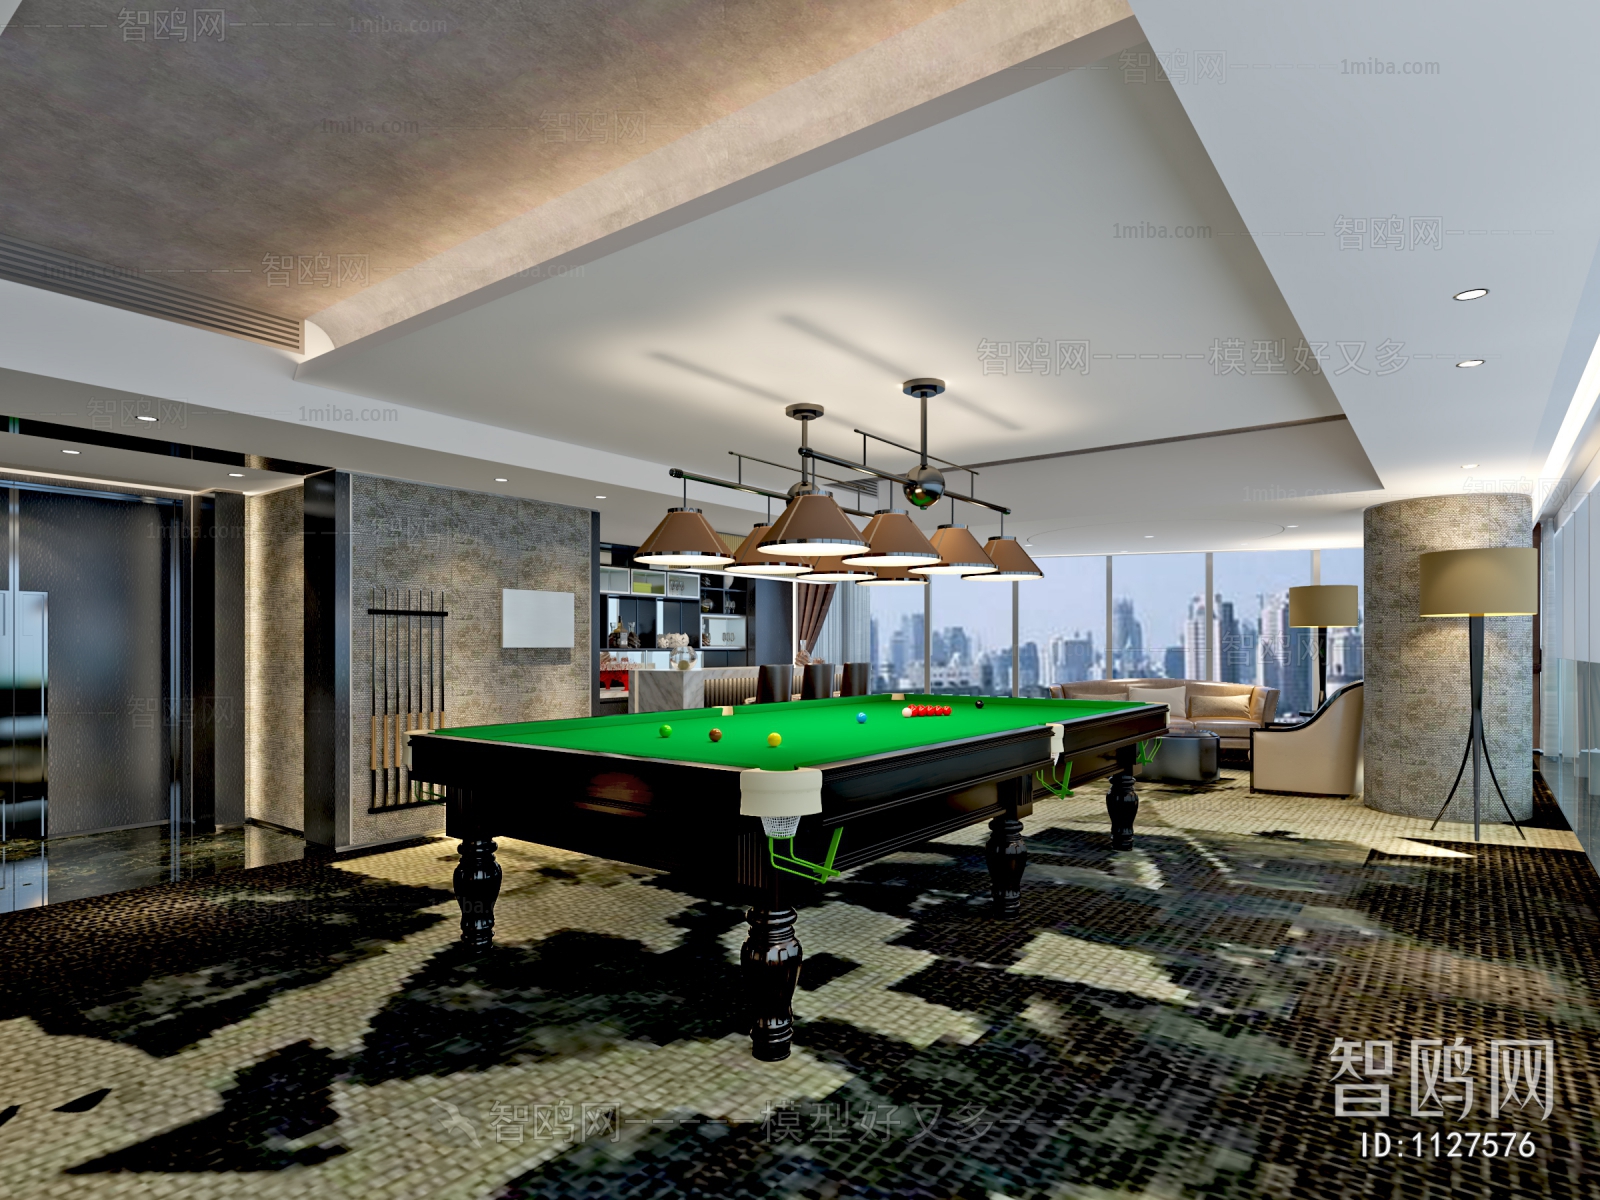 Modern Billiards Room